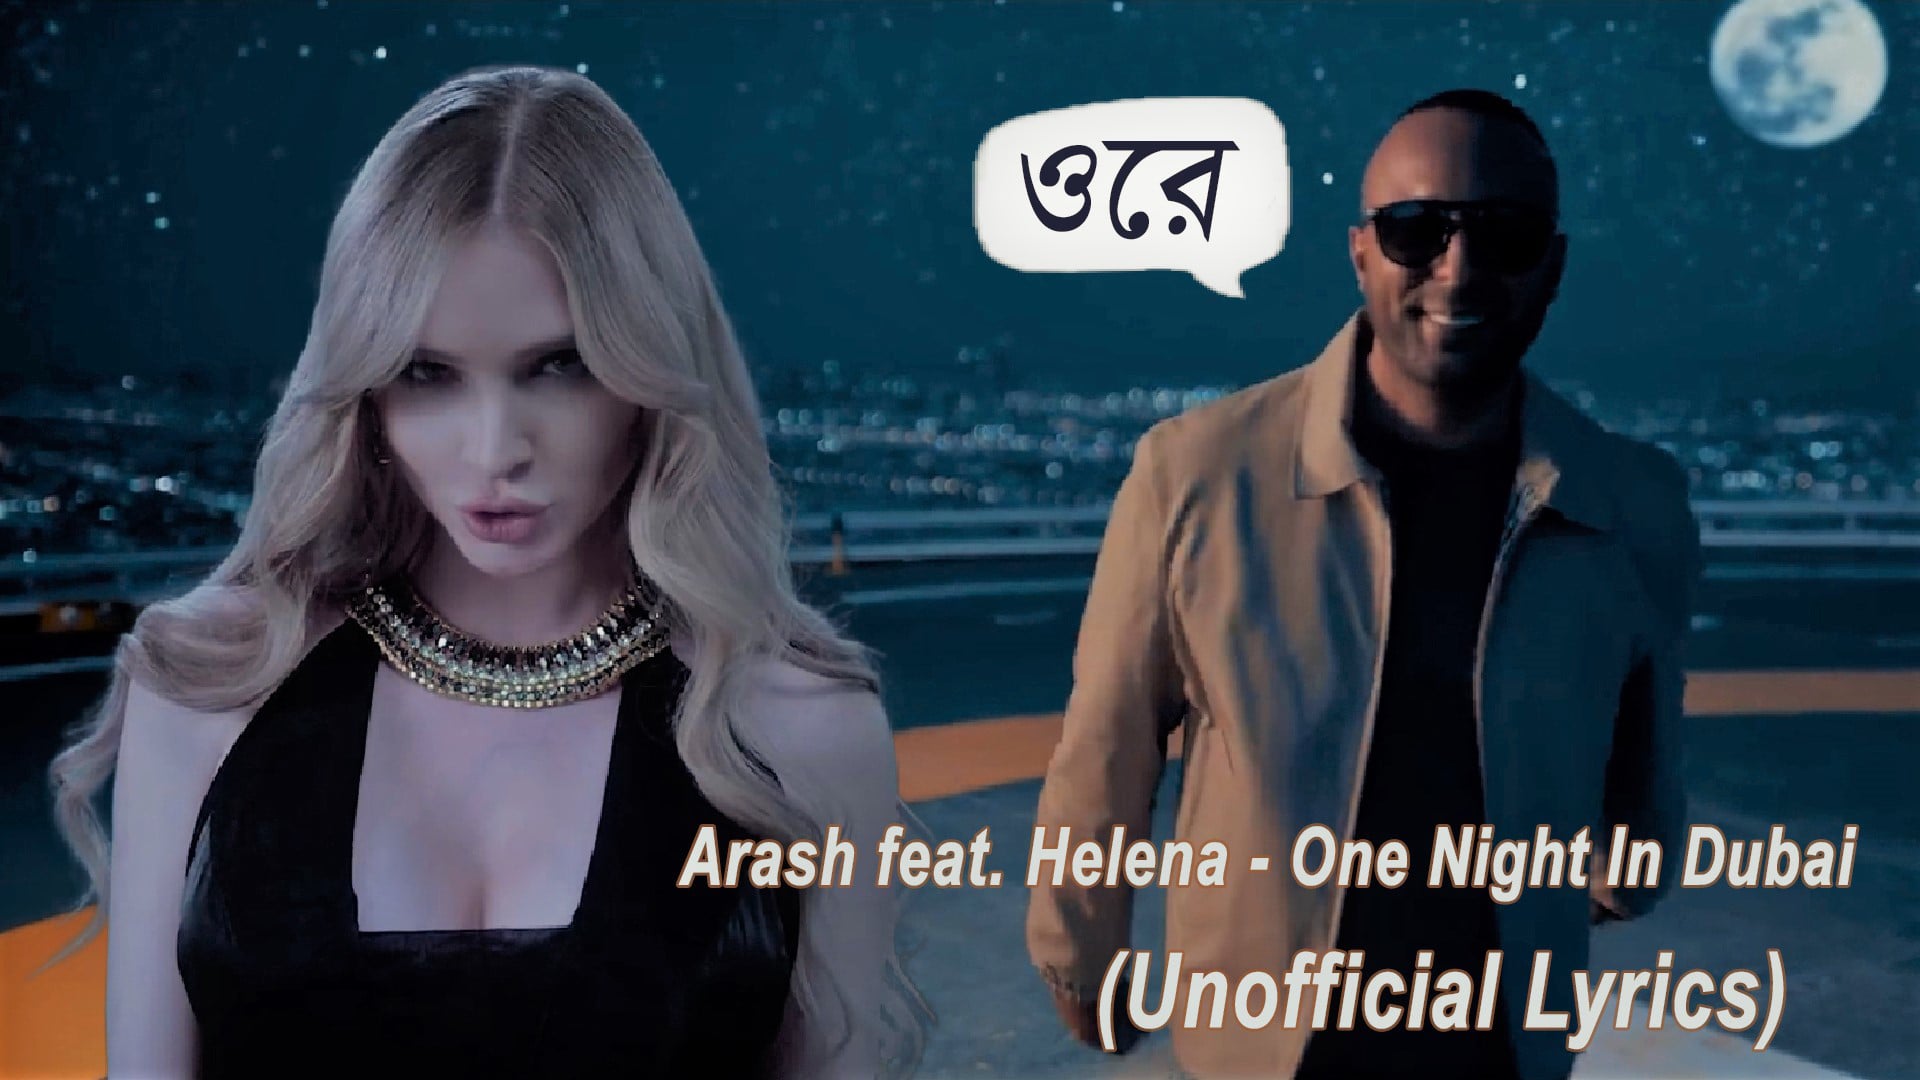 Arash Feat. Helena - One Night In Dubai (Unofficial বাংলা Lyrics) On Vimeo